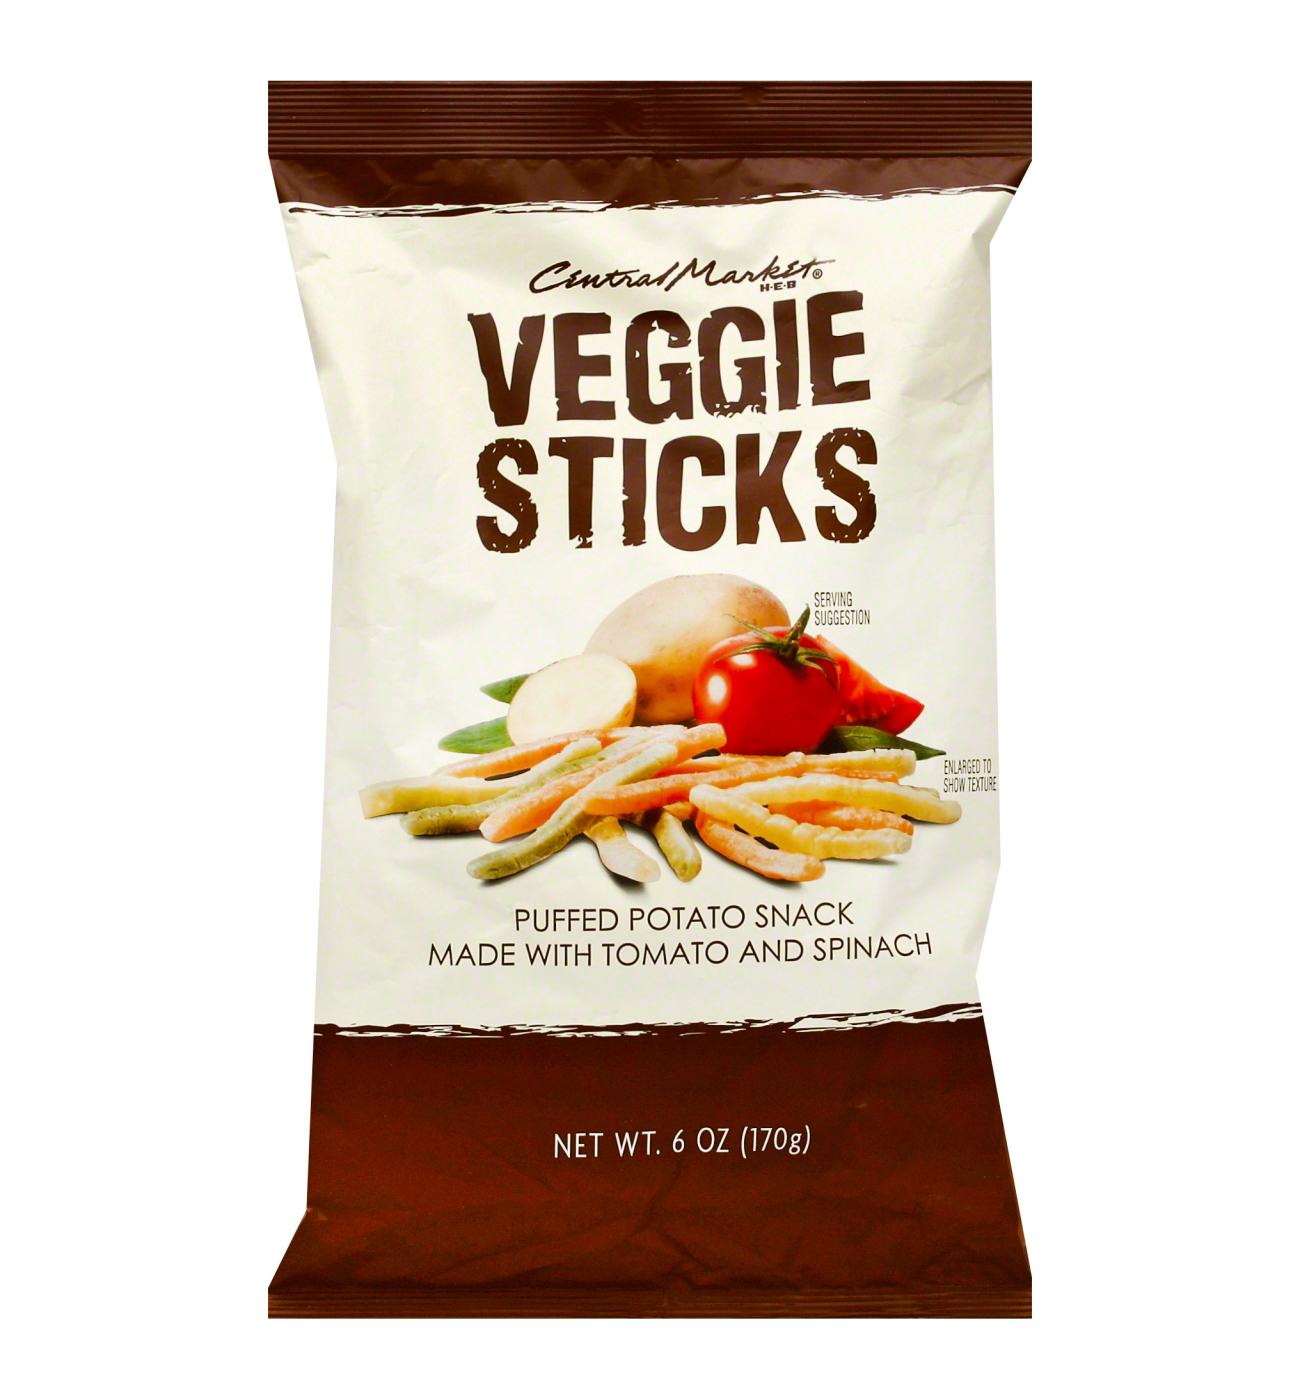 Central Market Veggie Sticks Puffed Potato Snack; image 1 of 2